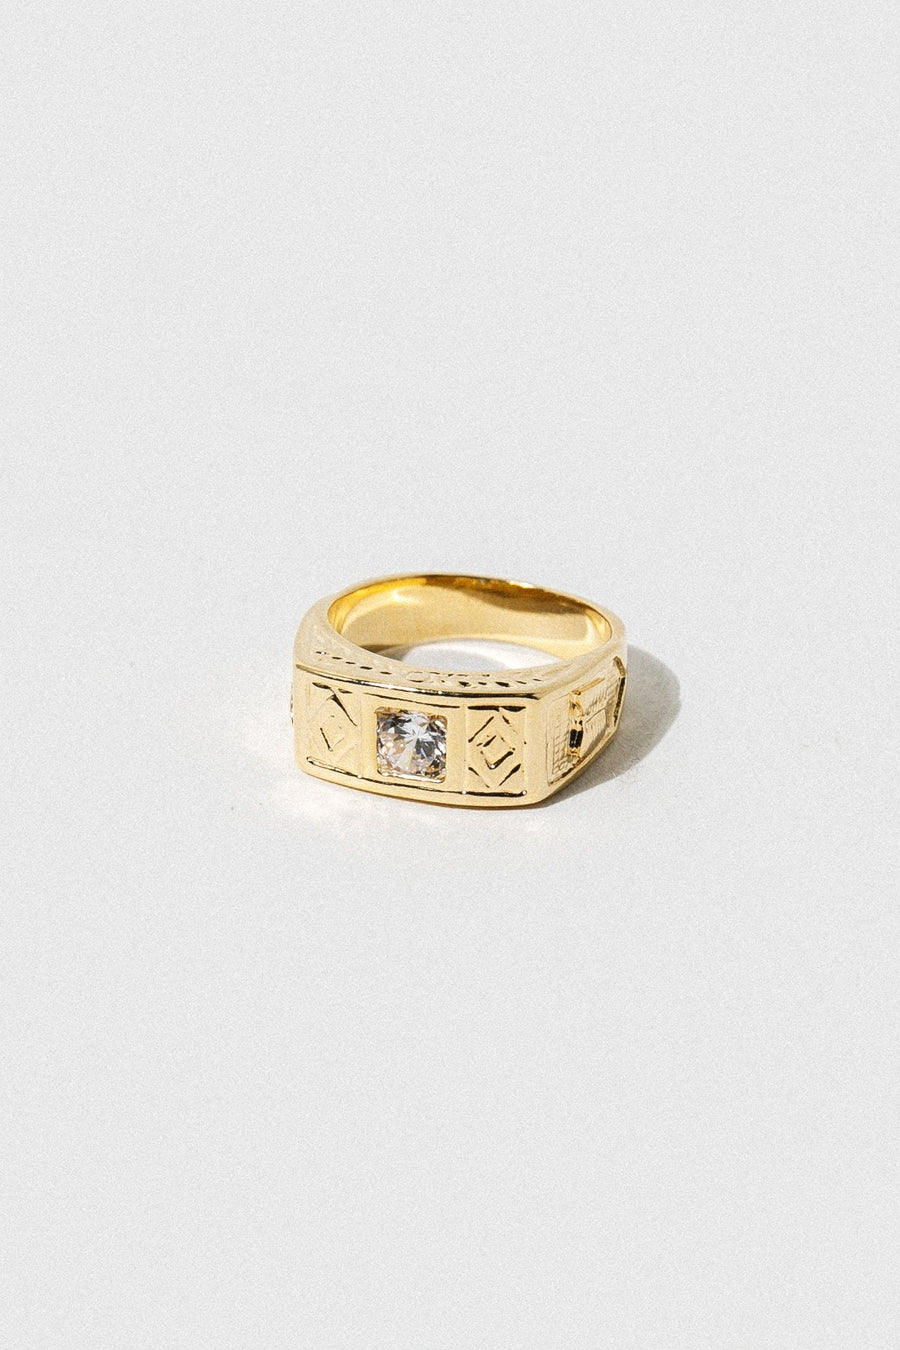 Dona Italia Jewelry US 4 / Gold Giorgio Pinky Ring